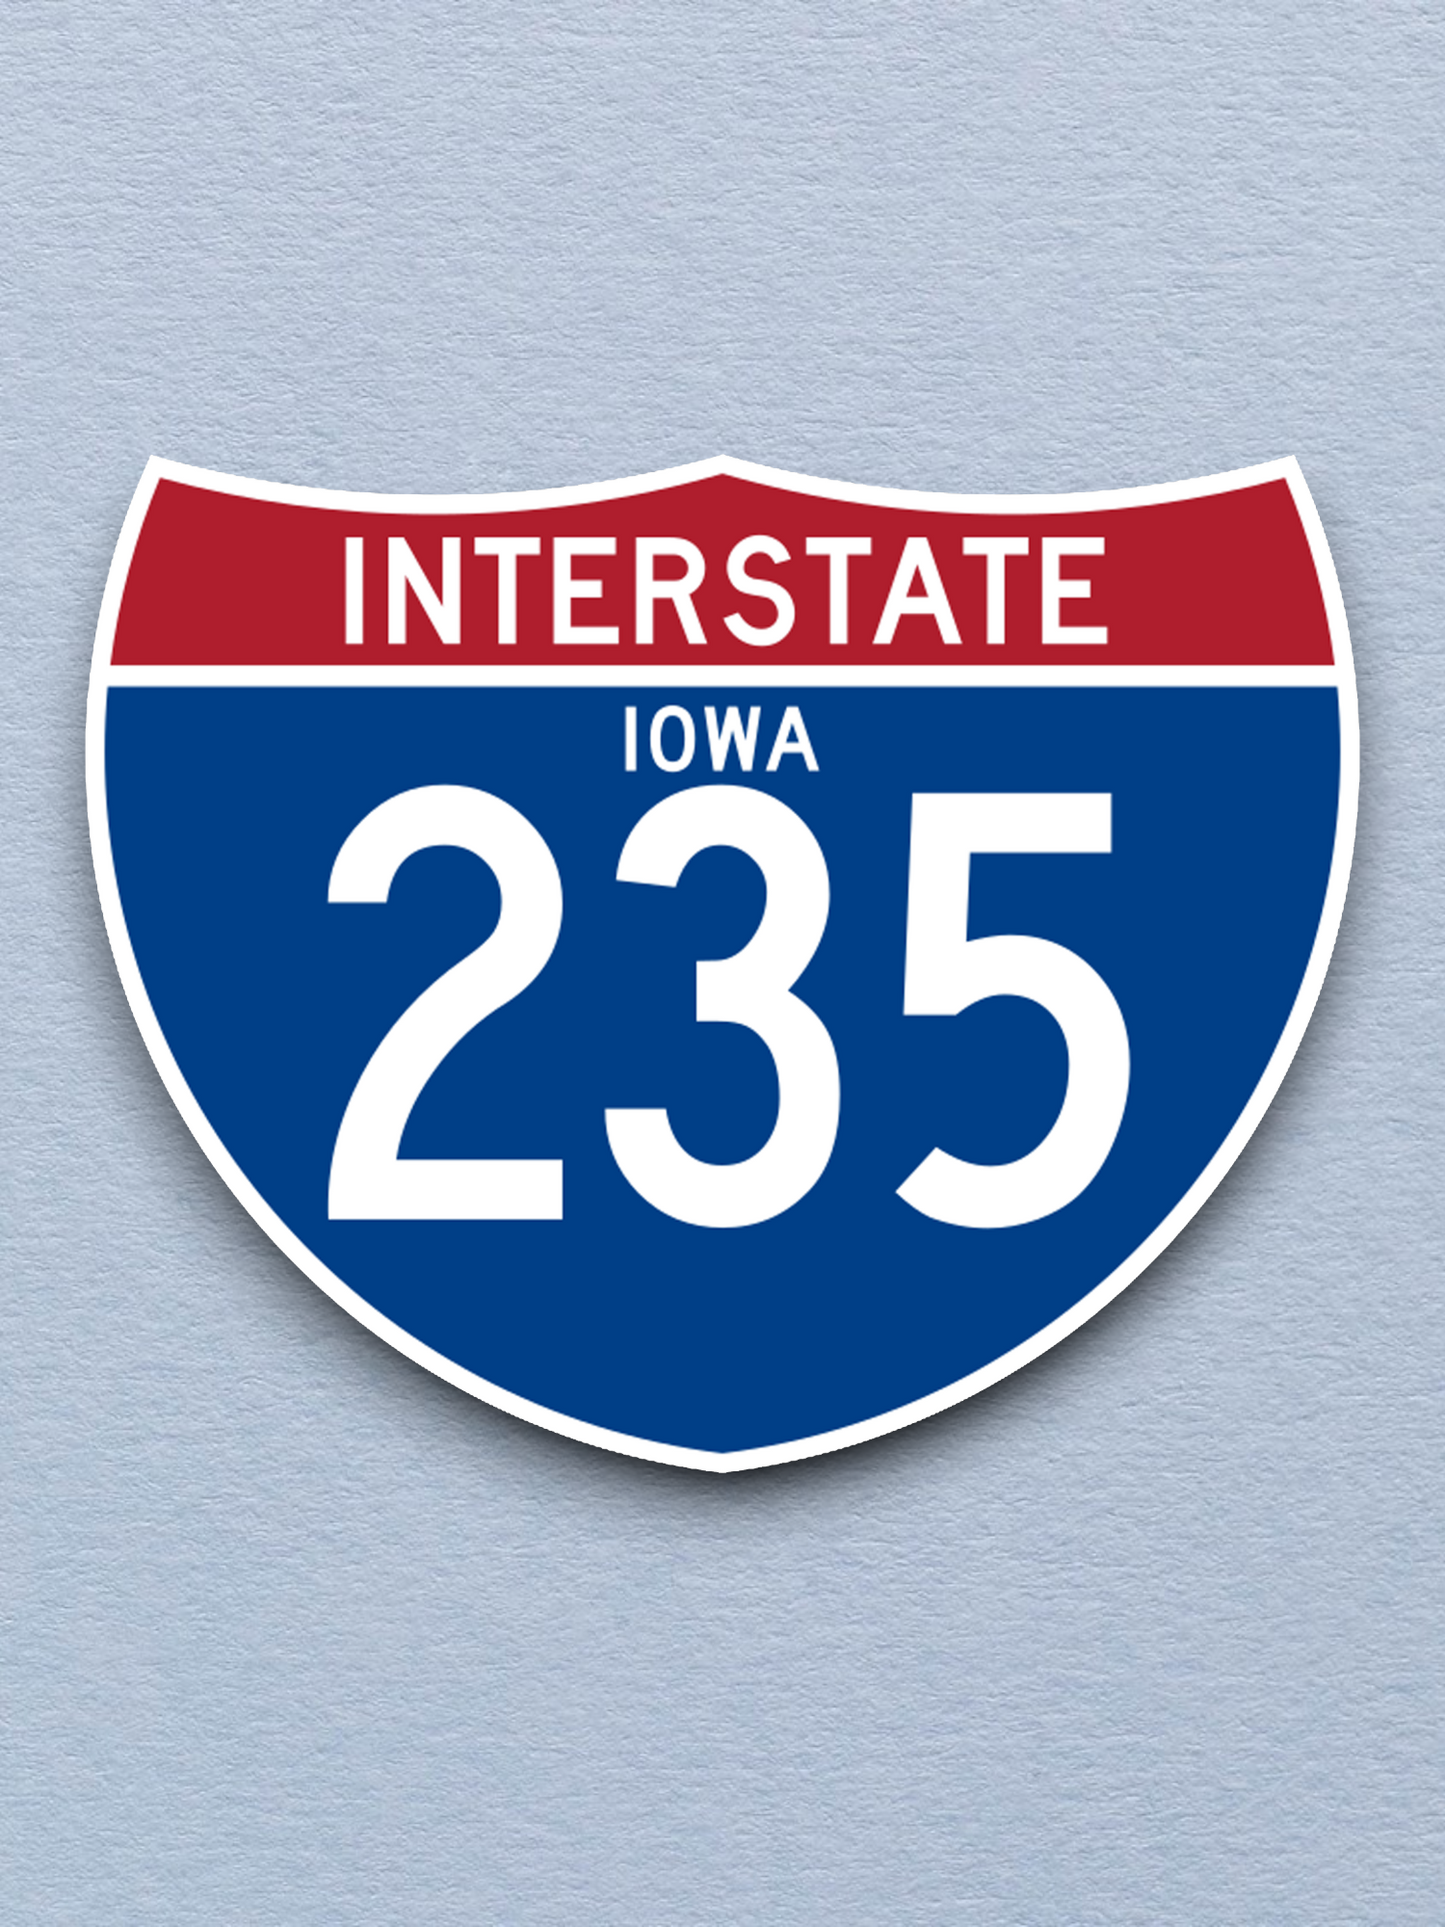 Interstate I-235 Iowa Road Sign Sticker